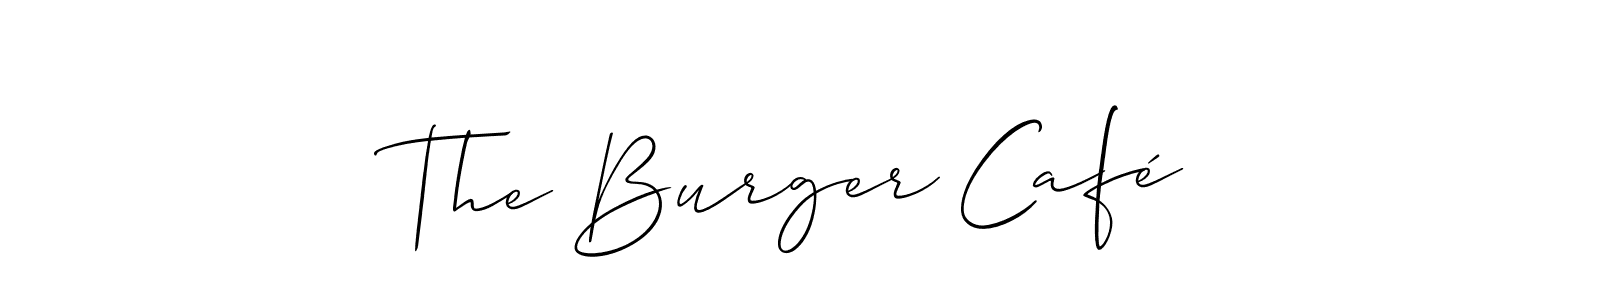 How to make The Burger Café signature? Allison_Script is a professional autograph style. Create handwritten signature for The Burger Café name. The Burger Café signature style 2 images and pictures png